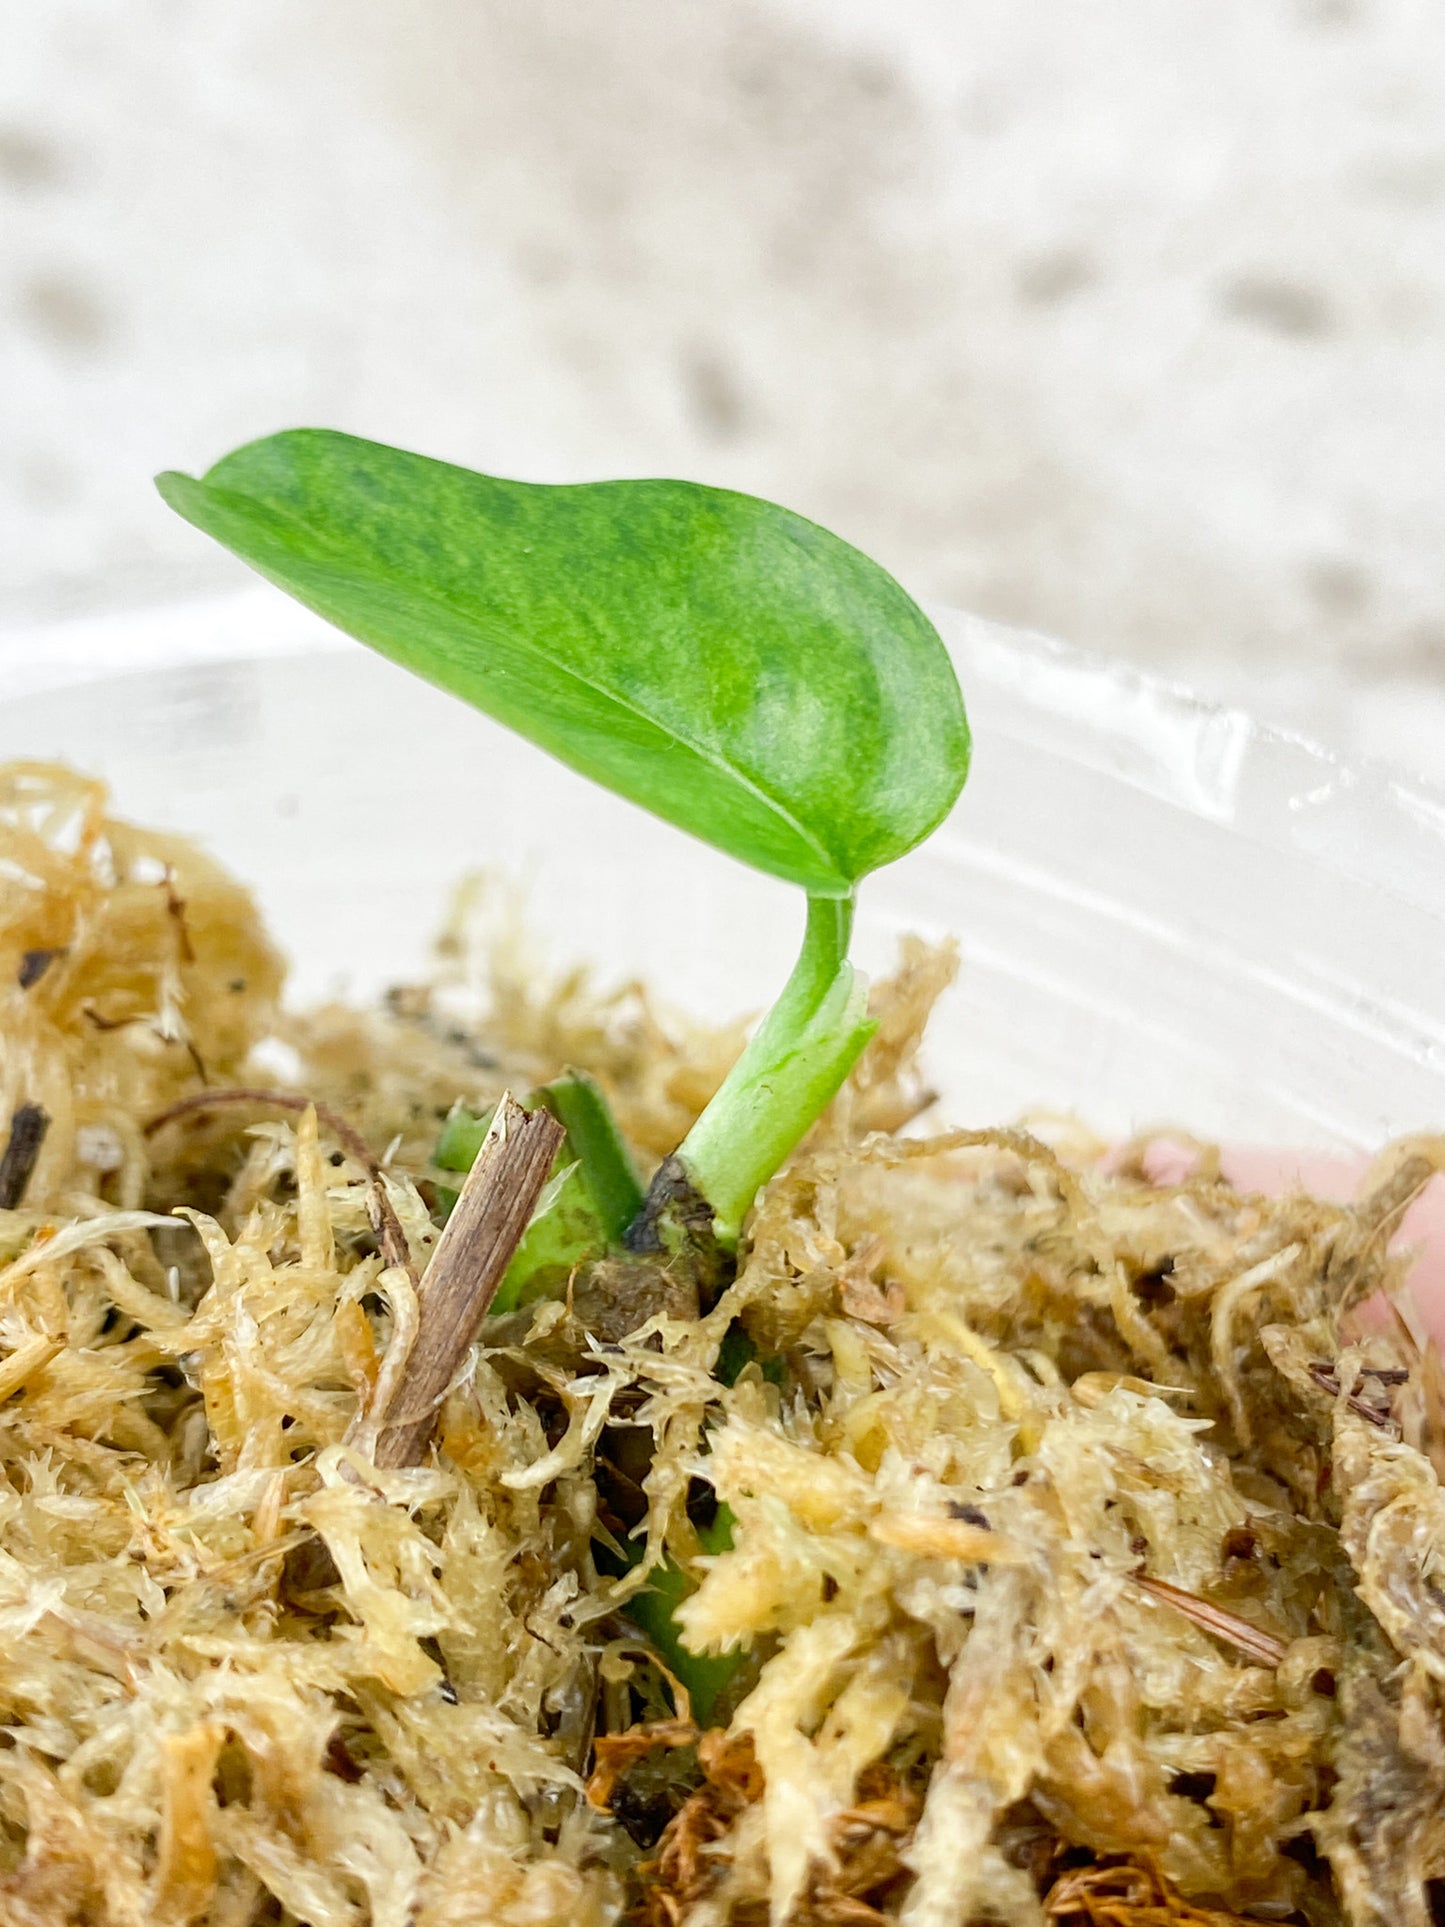 Epipremnum Pinnatum Mint 1 baby leaf (rooting)